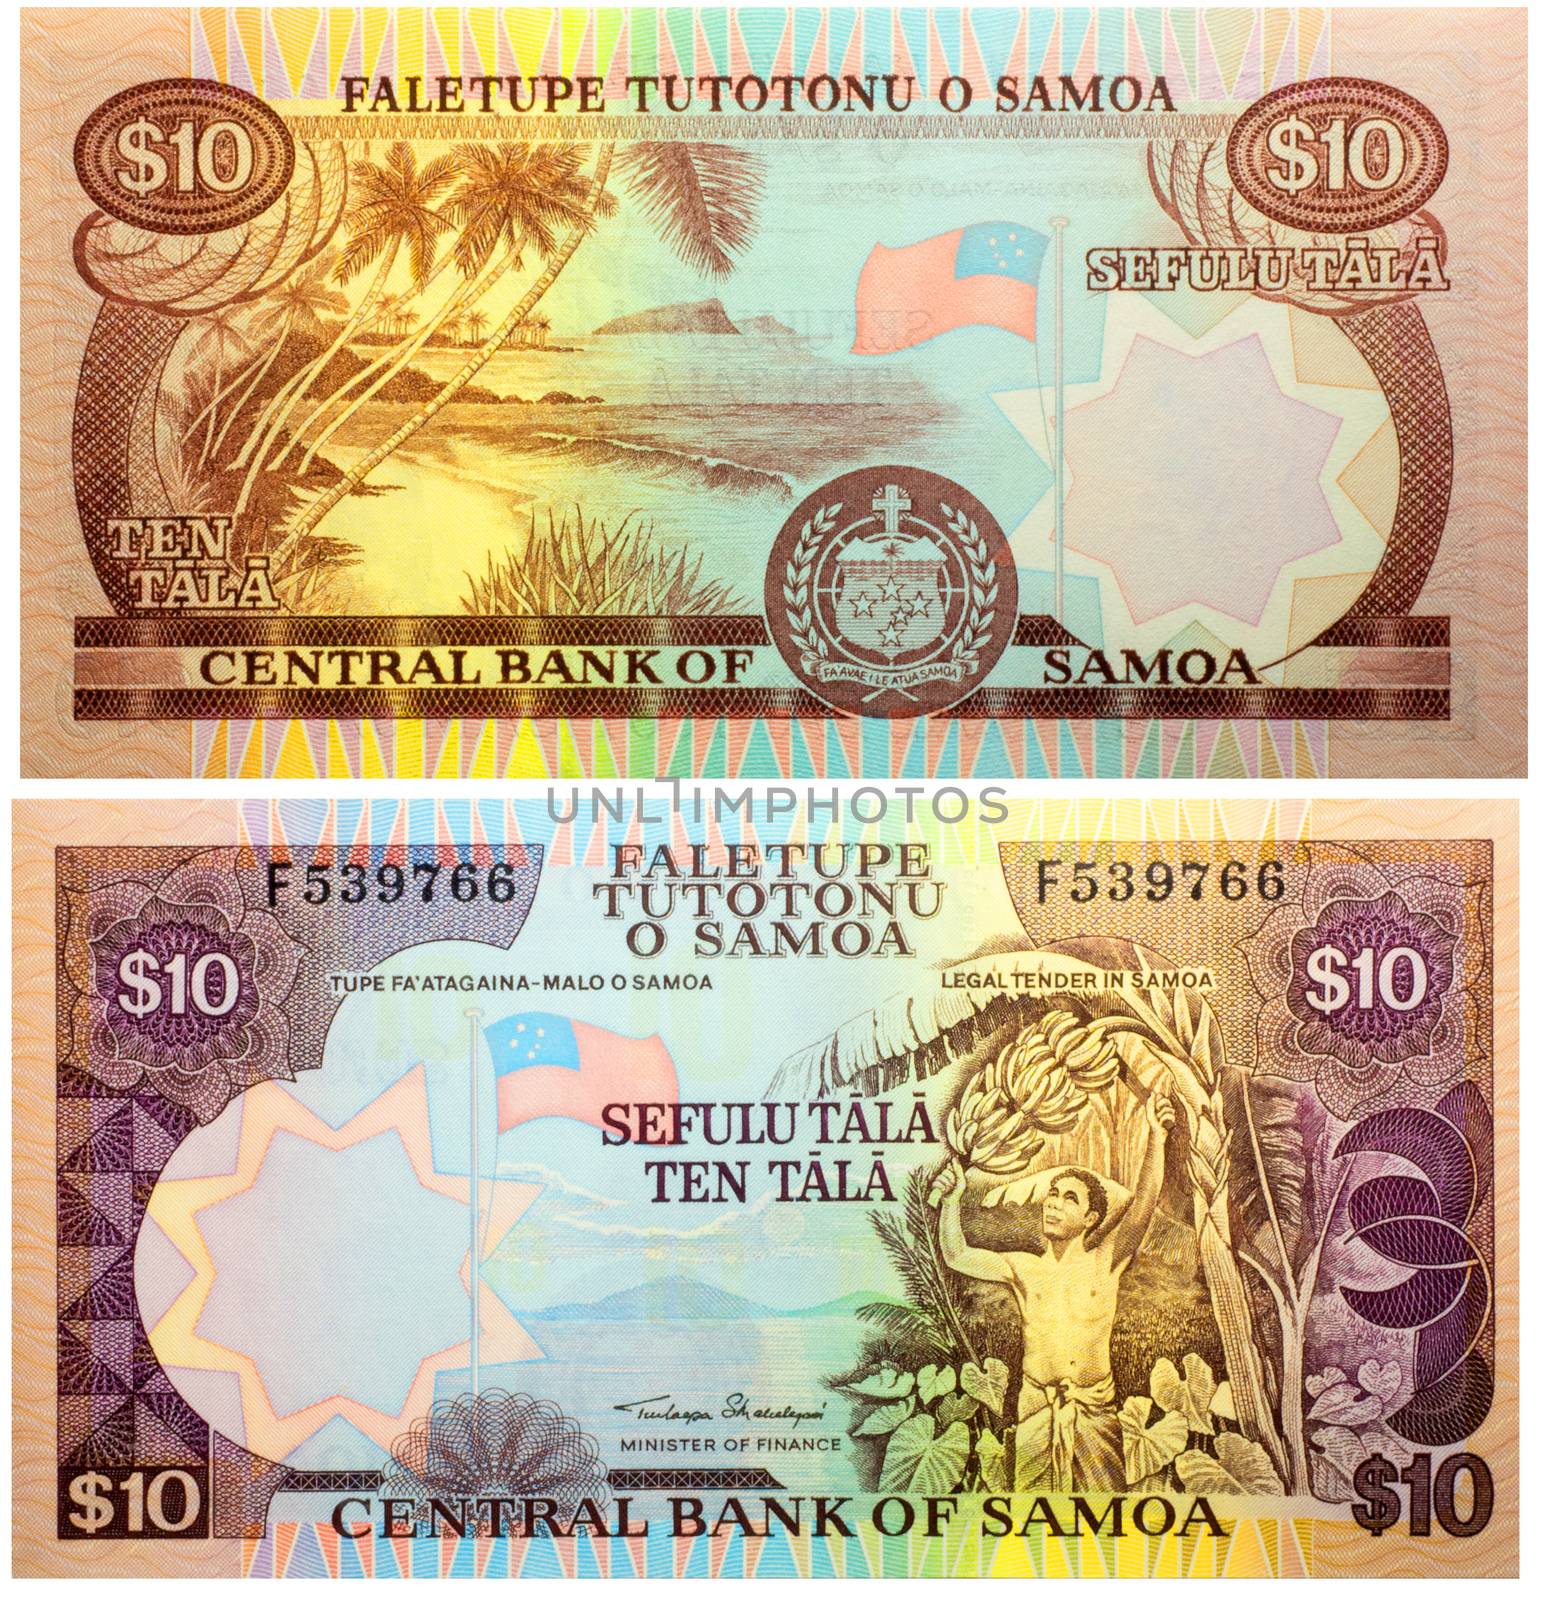 Banknote 10 Tala Samoa 2002 by rigamondis